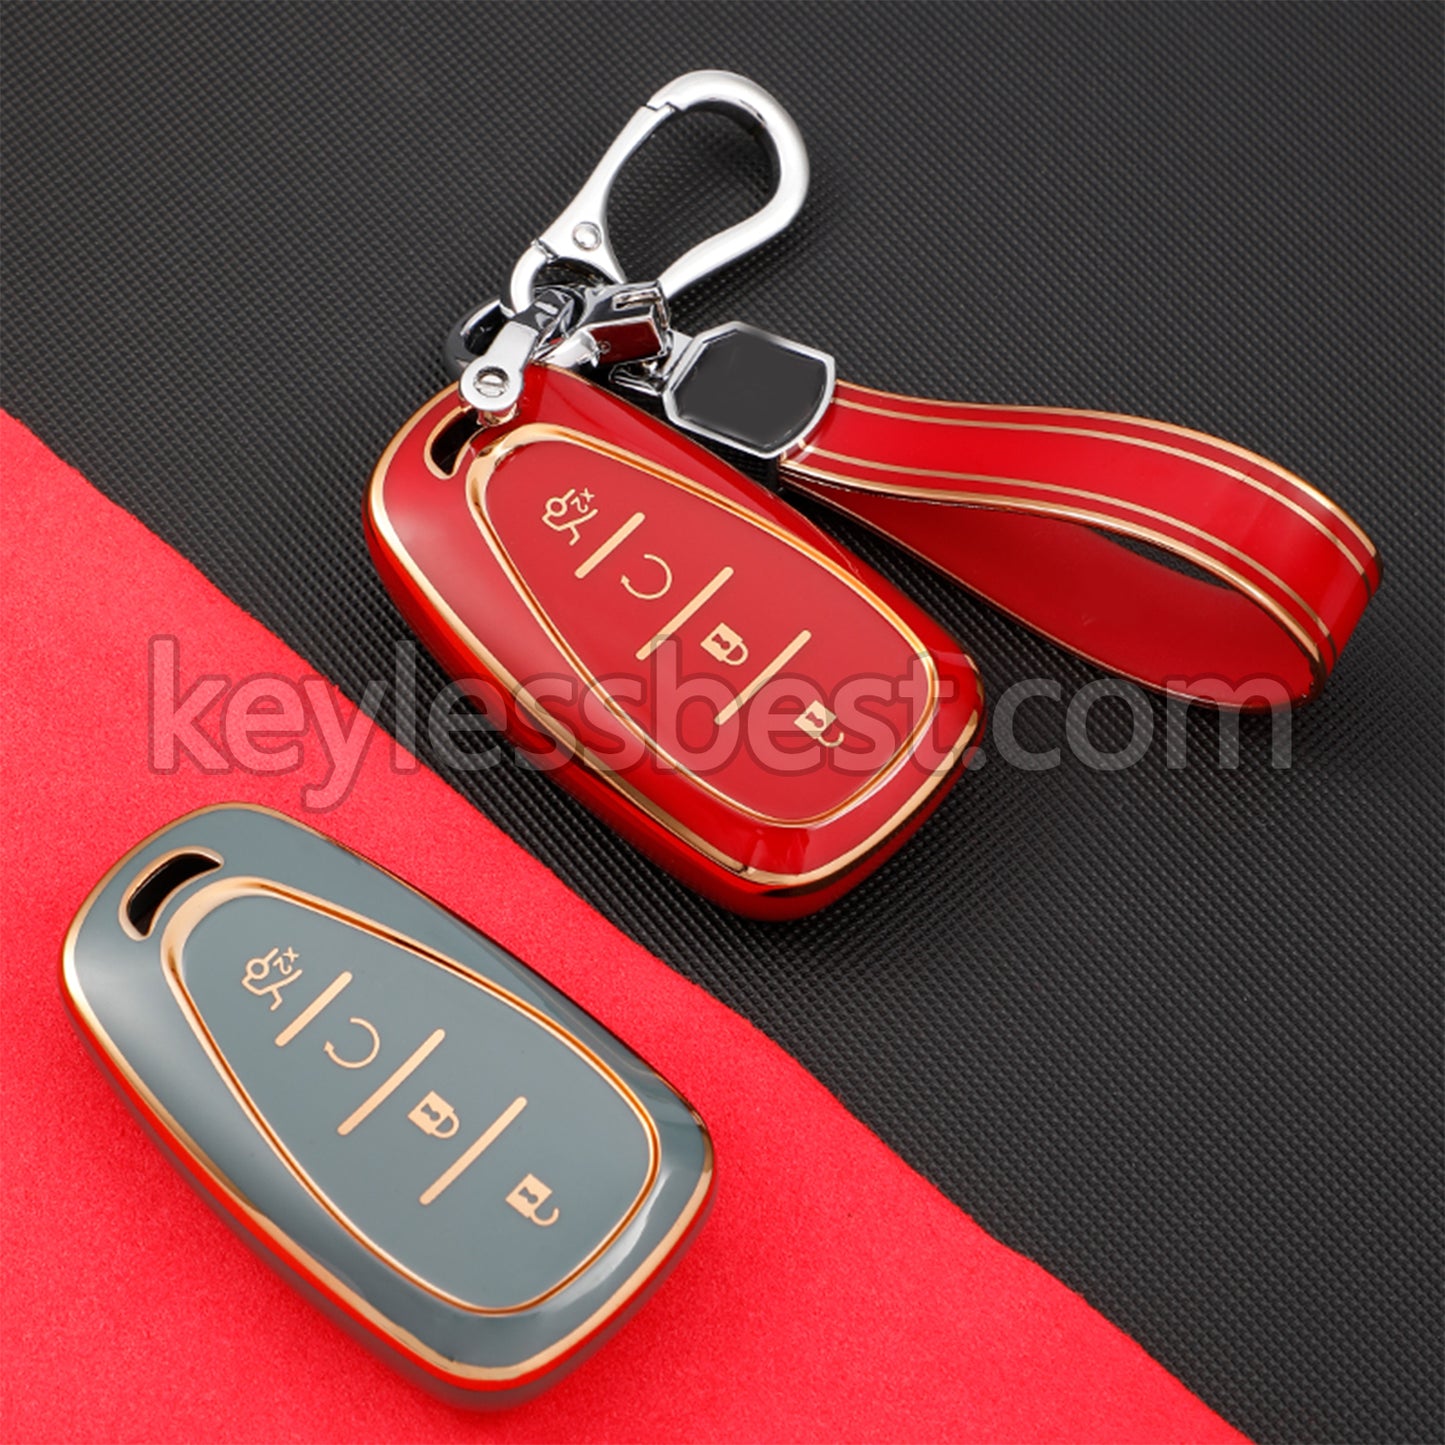 TPU Car Key cover For Chevrolet Car Key cover case holder